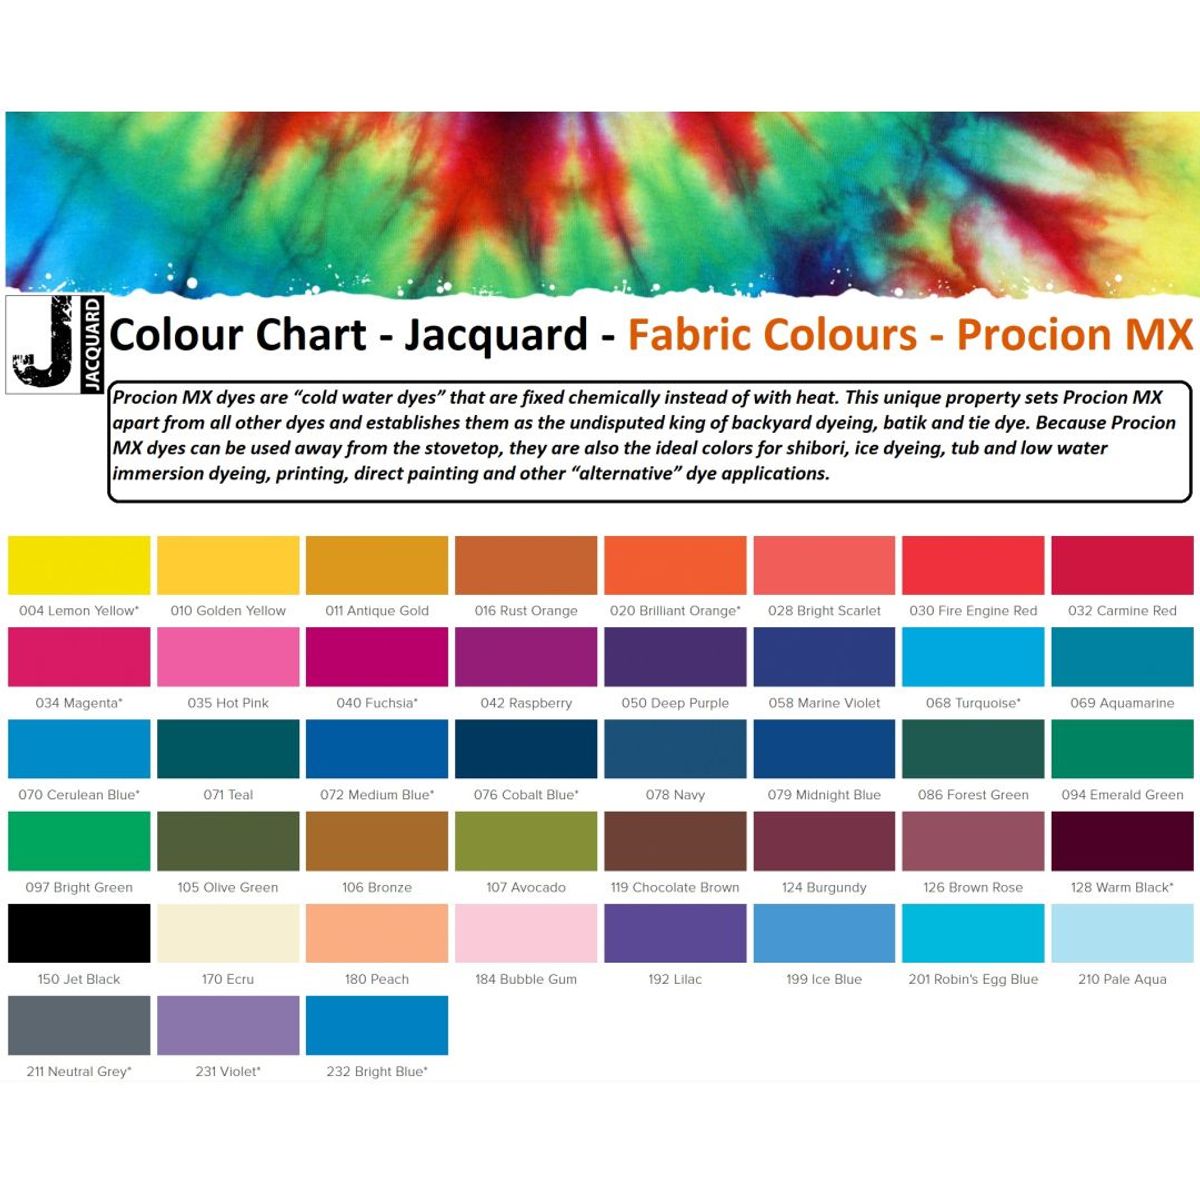 Jacquard - Procion MX Dye - Fabric Textile - Forest Green 086